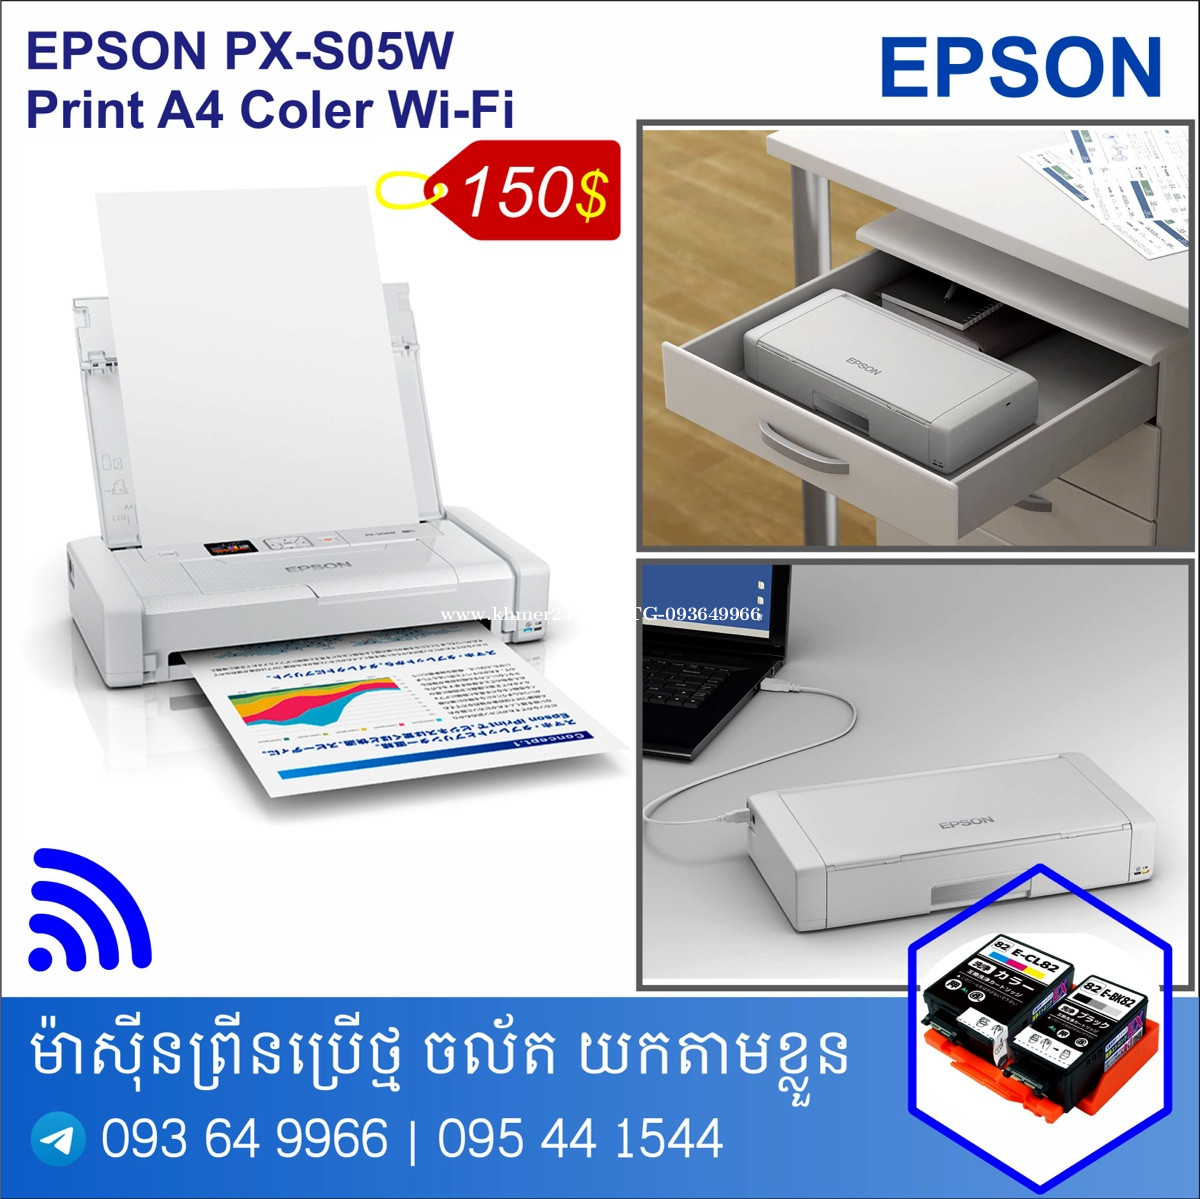 EPSON PX-S05W Price $140.00 in Phsar Thmei Muoy, Cambodia - TG 